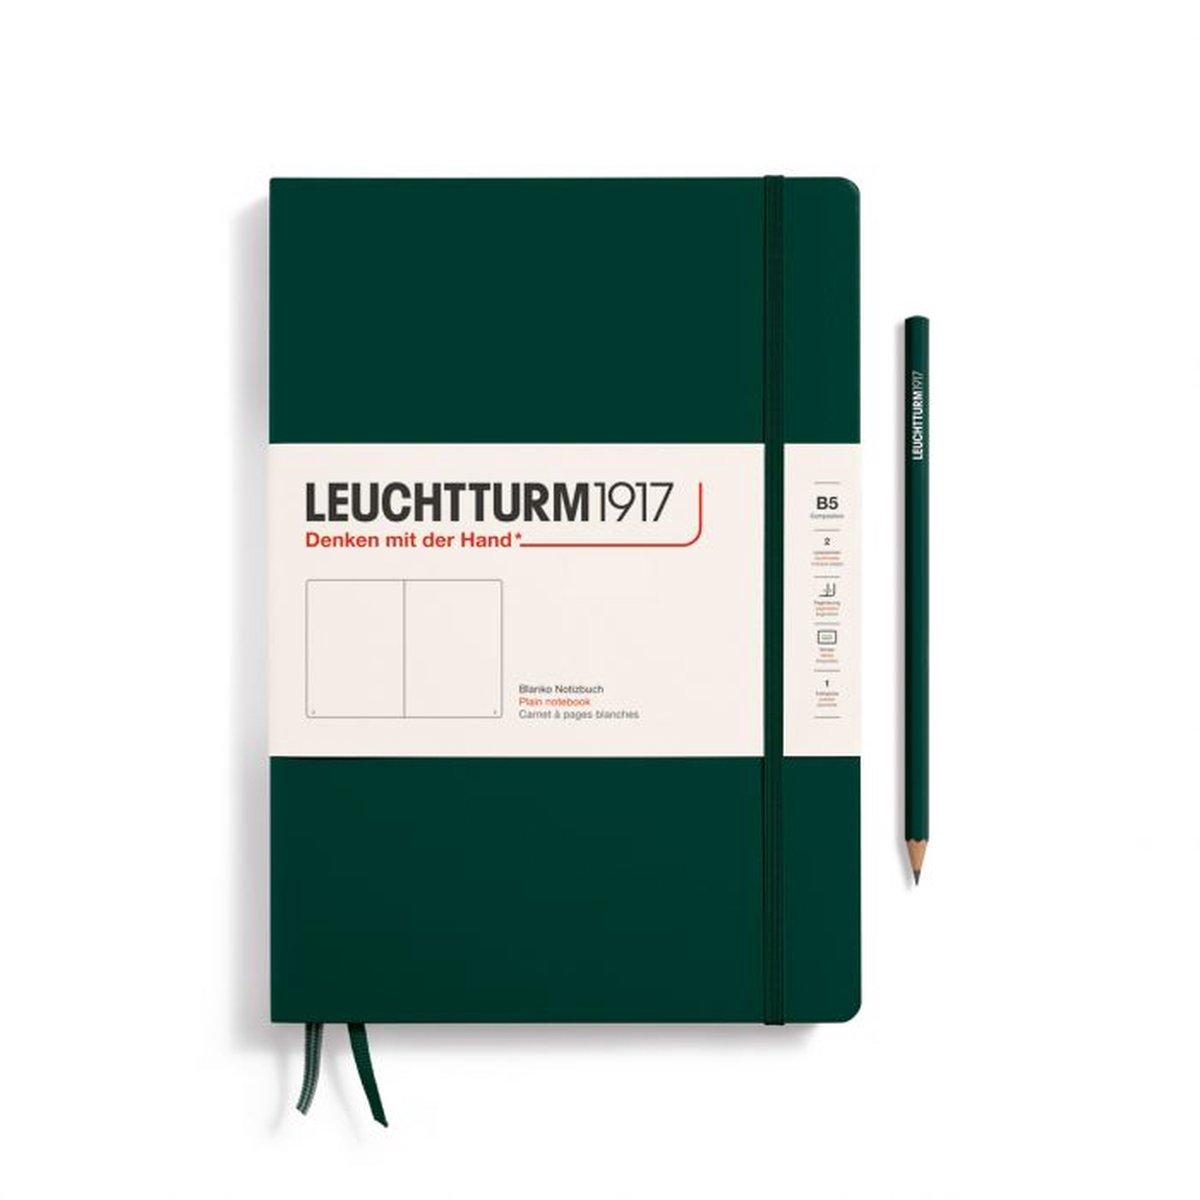 Leuchtturm notitieboek forest green blanco composition hardcover b5 178x254mm